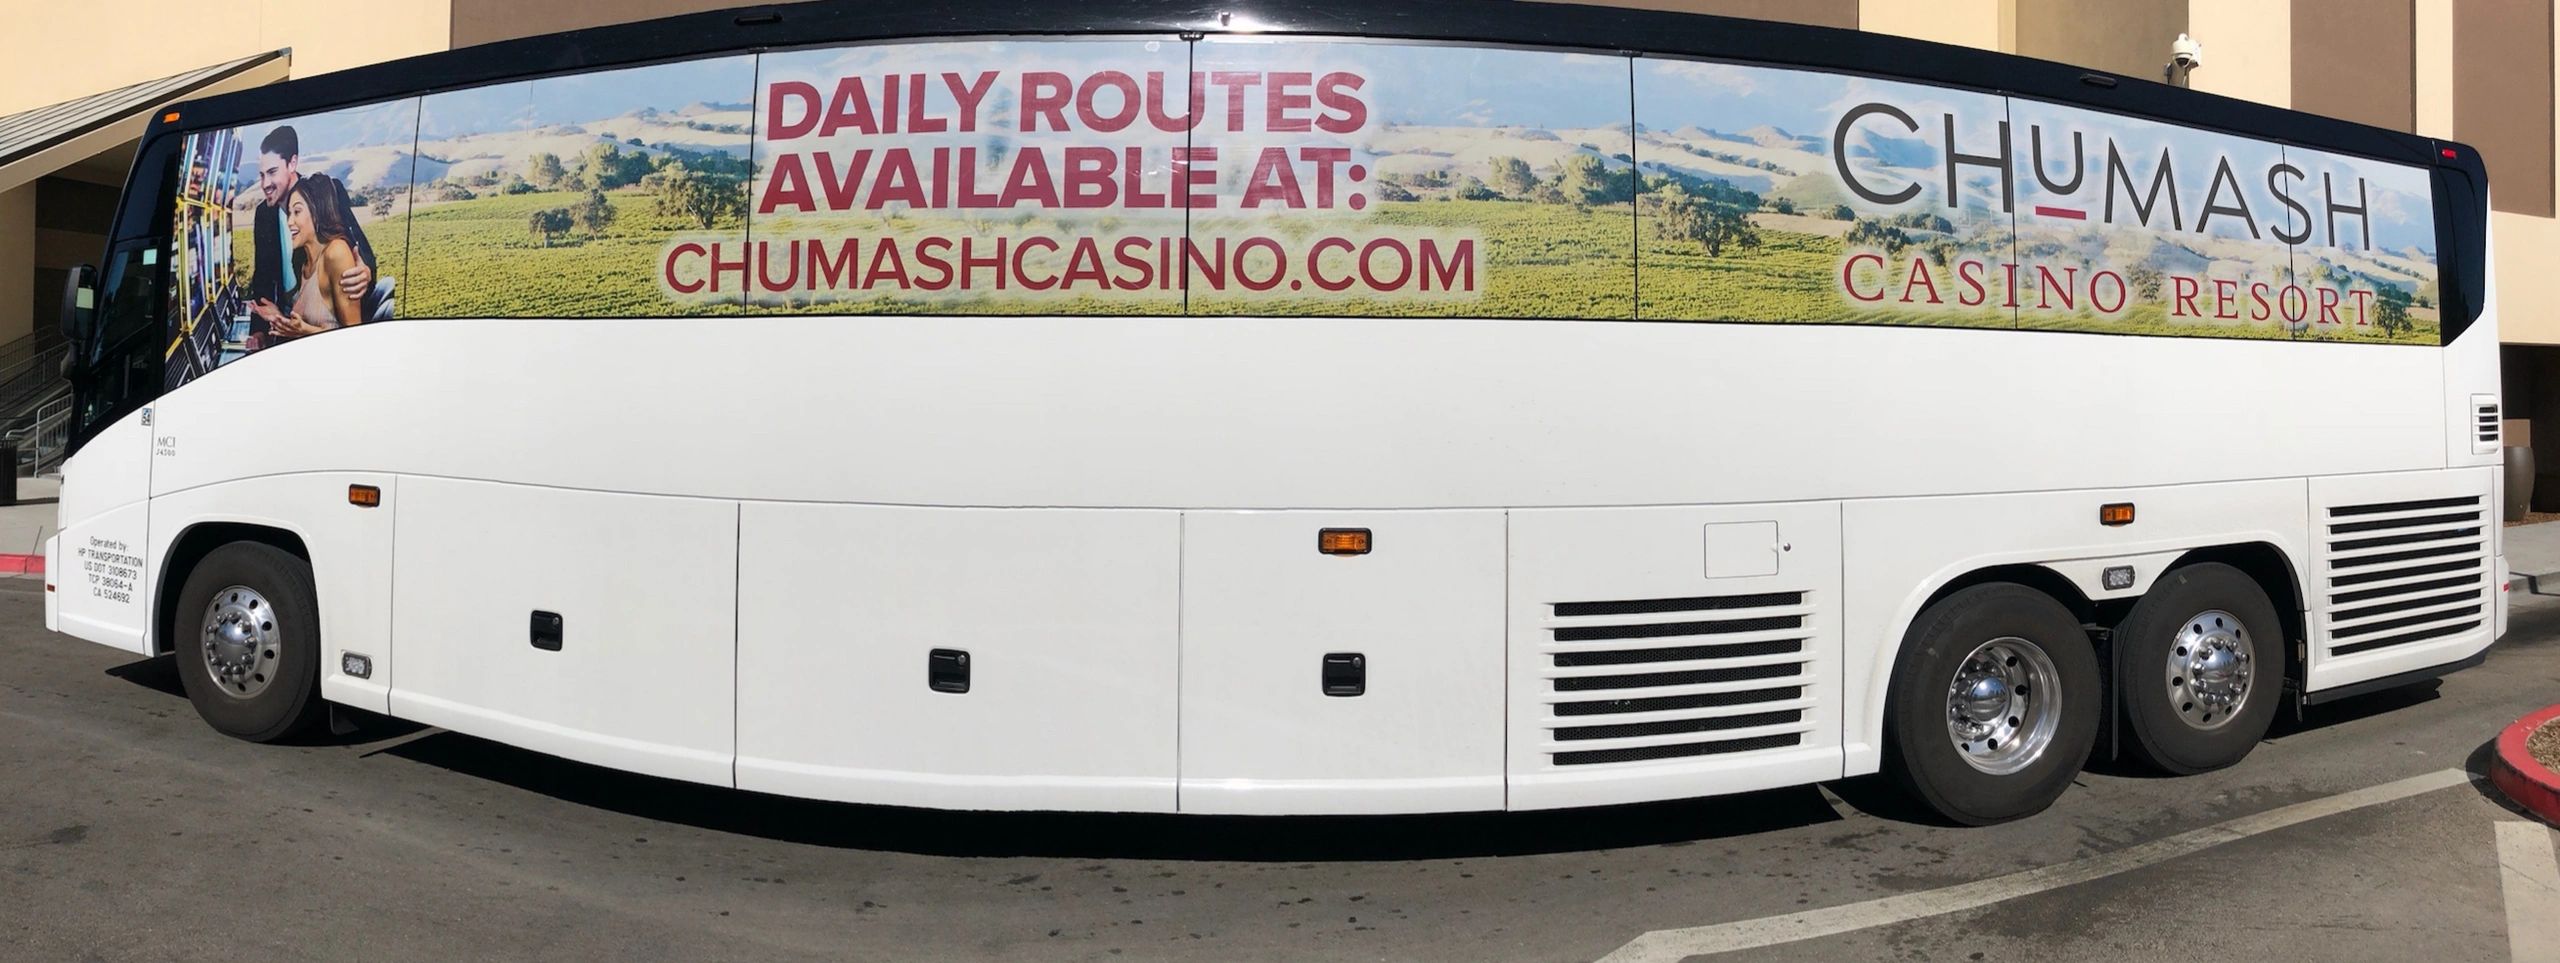 free bus to chumash casino